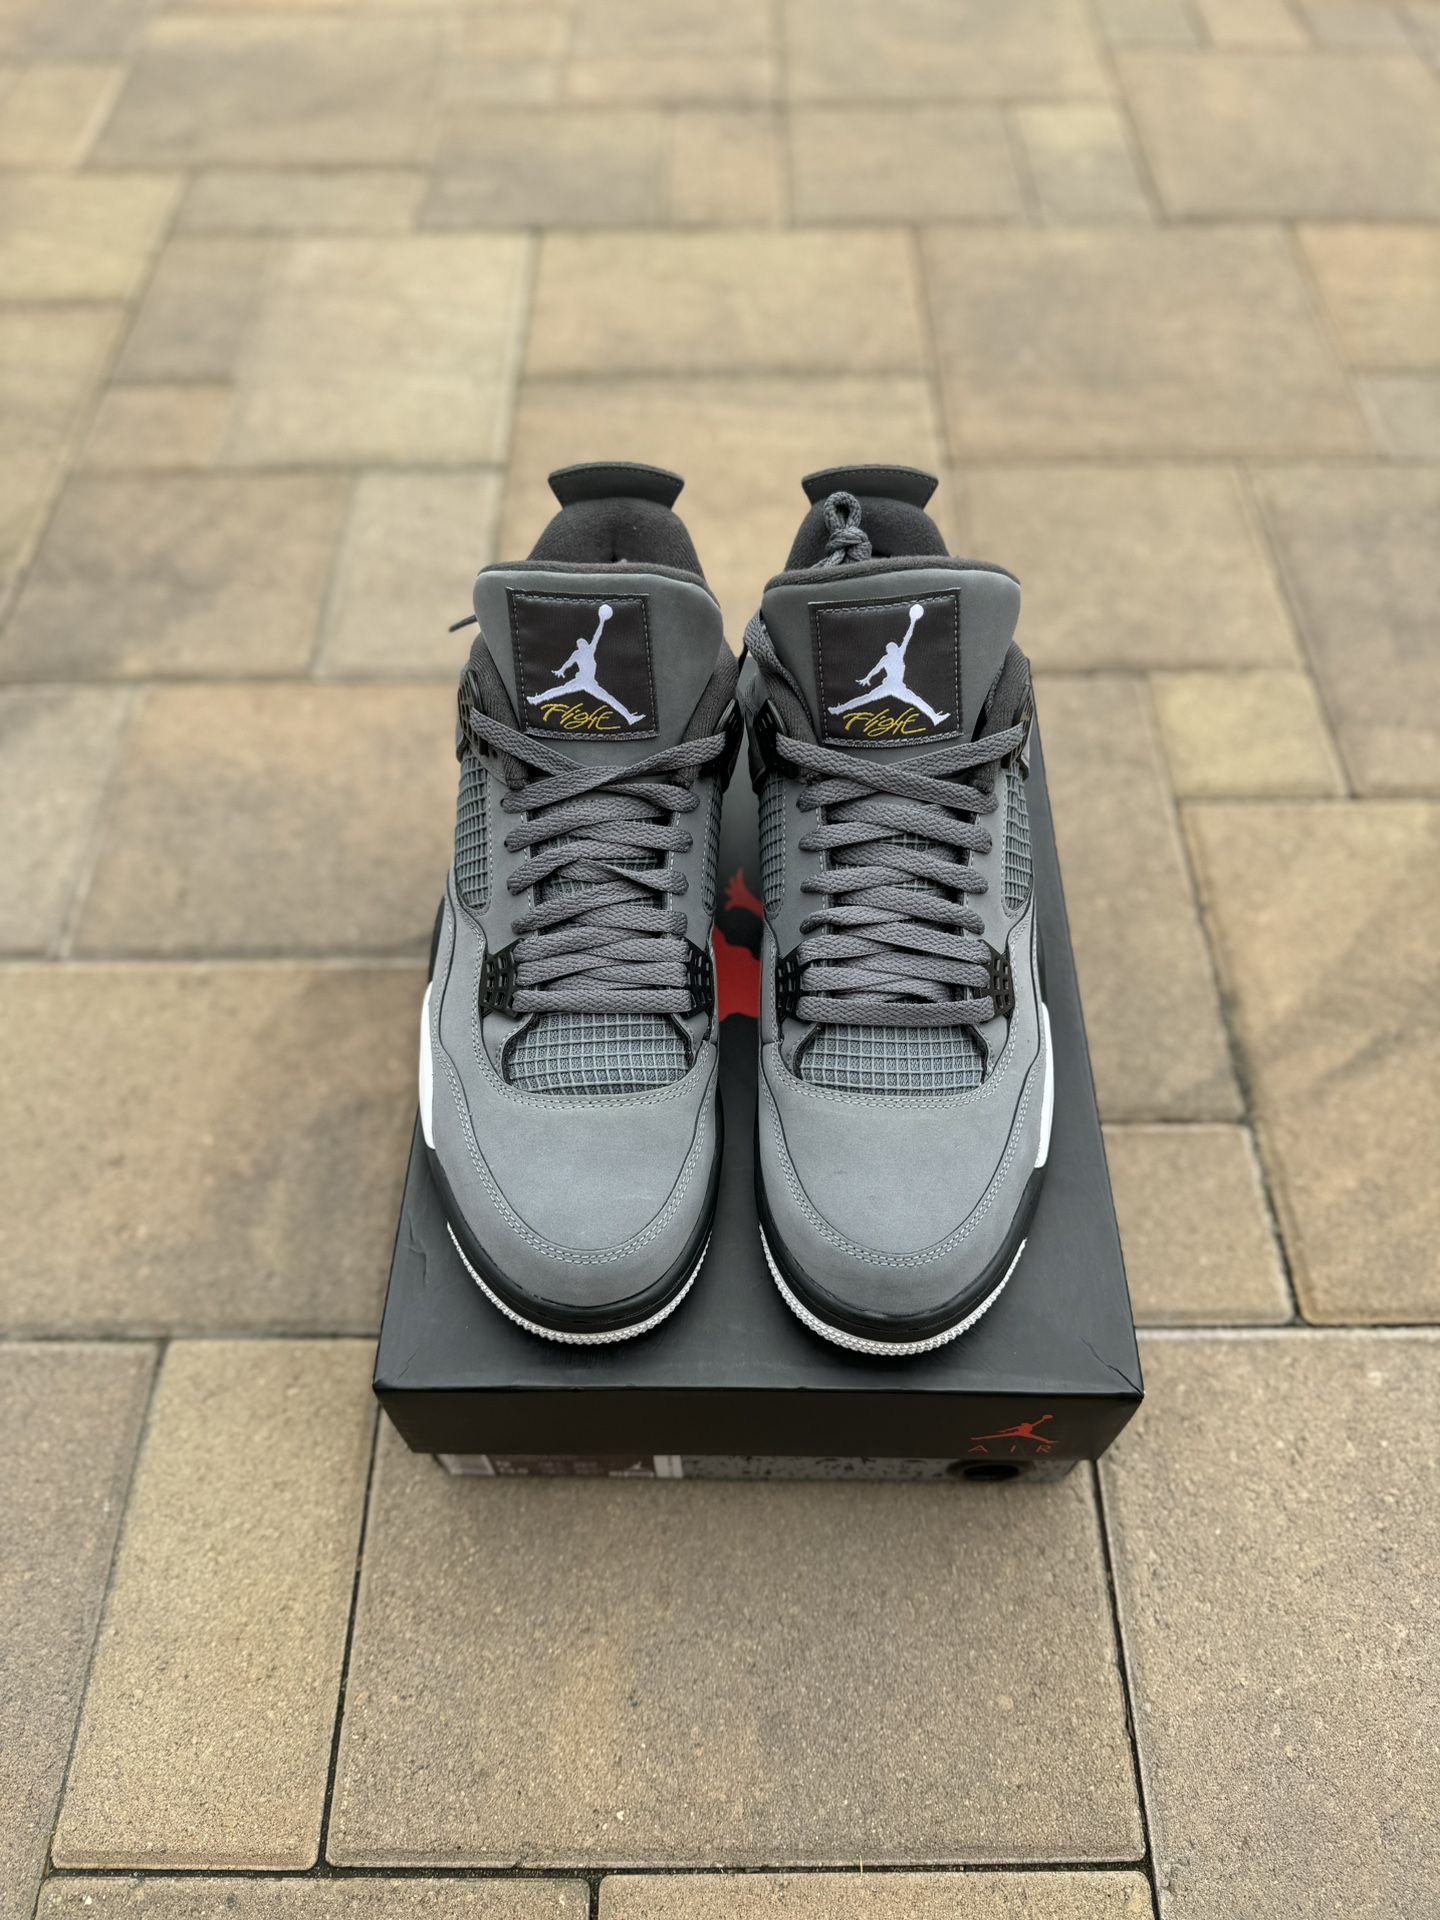 2019 Jordan 4 Cool Grey size 12